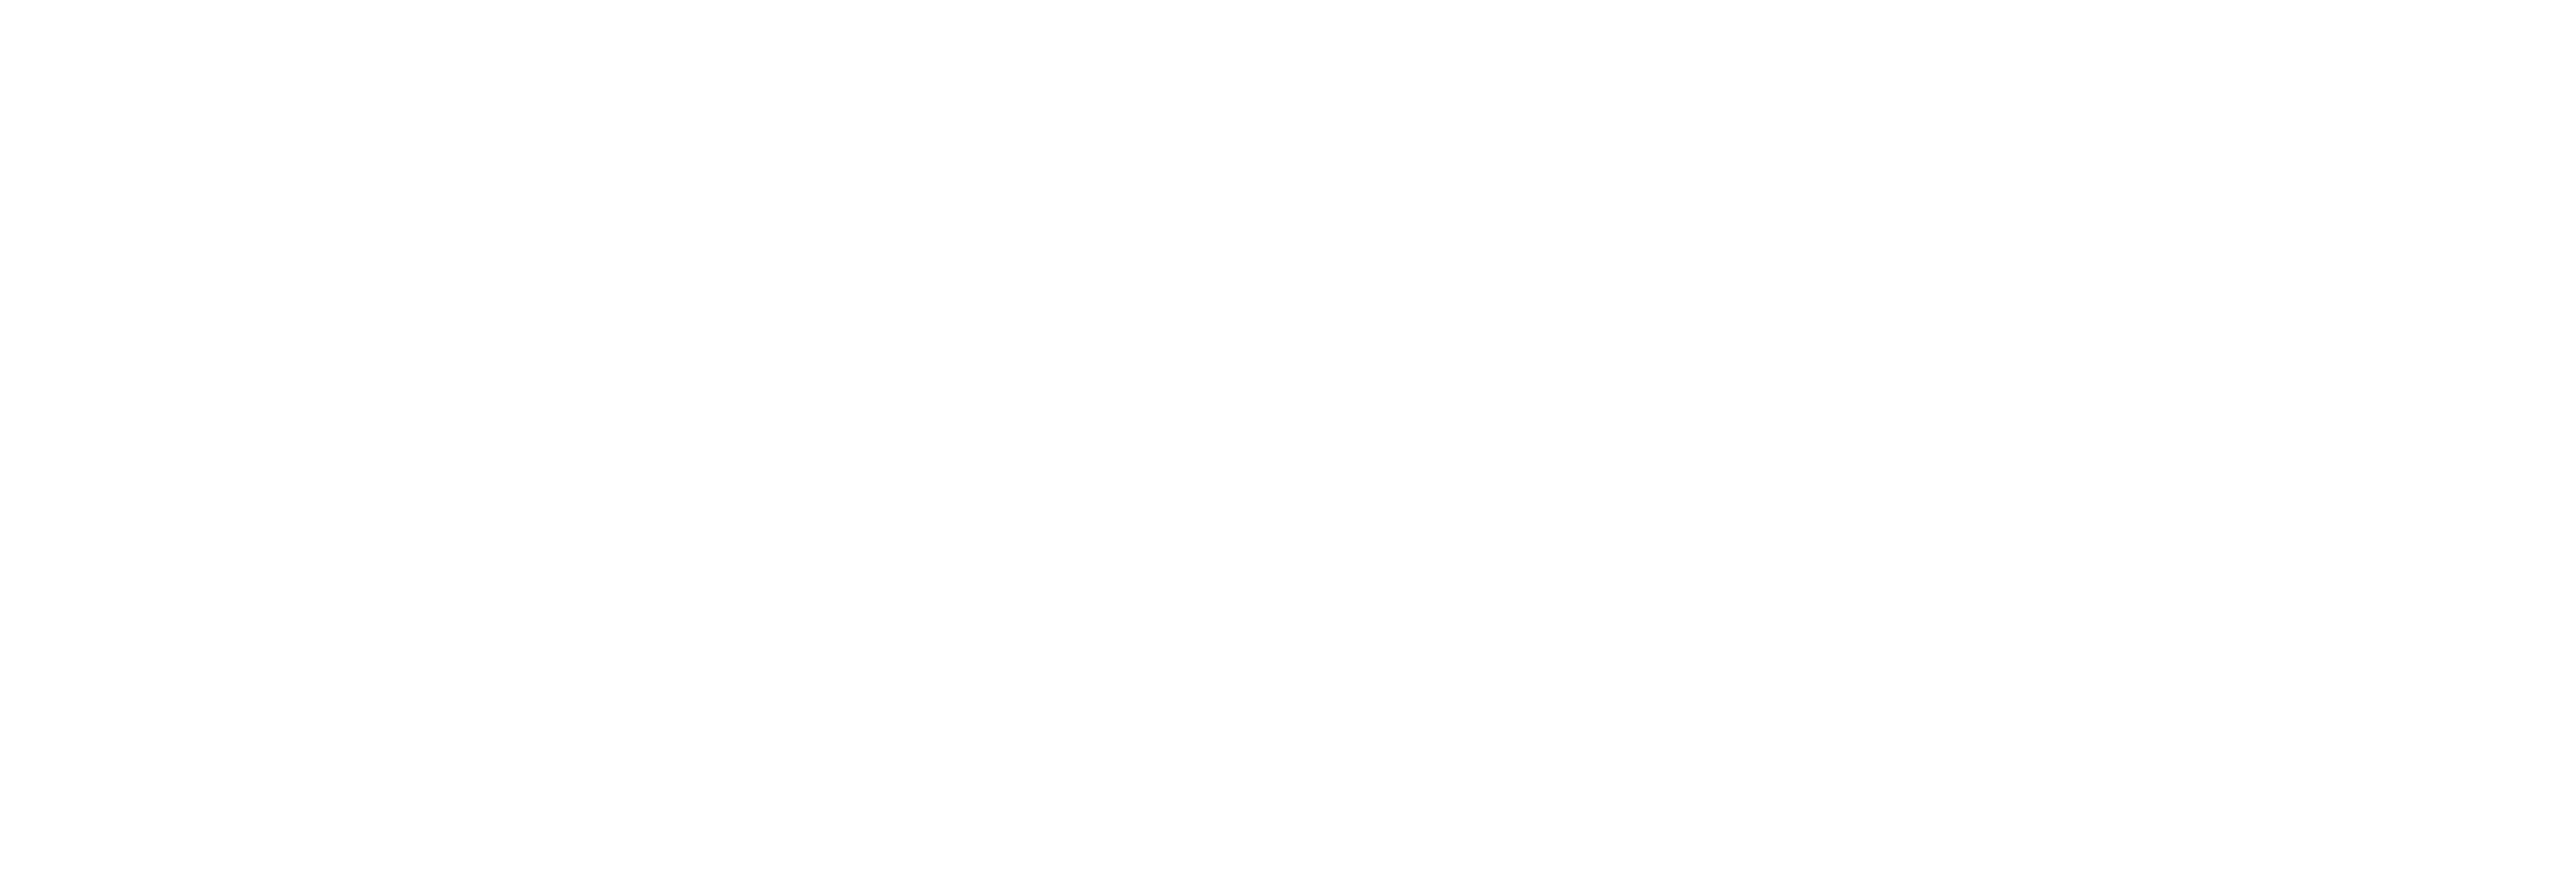 AniCura Hønefoss Dyrehospital logo